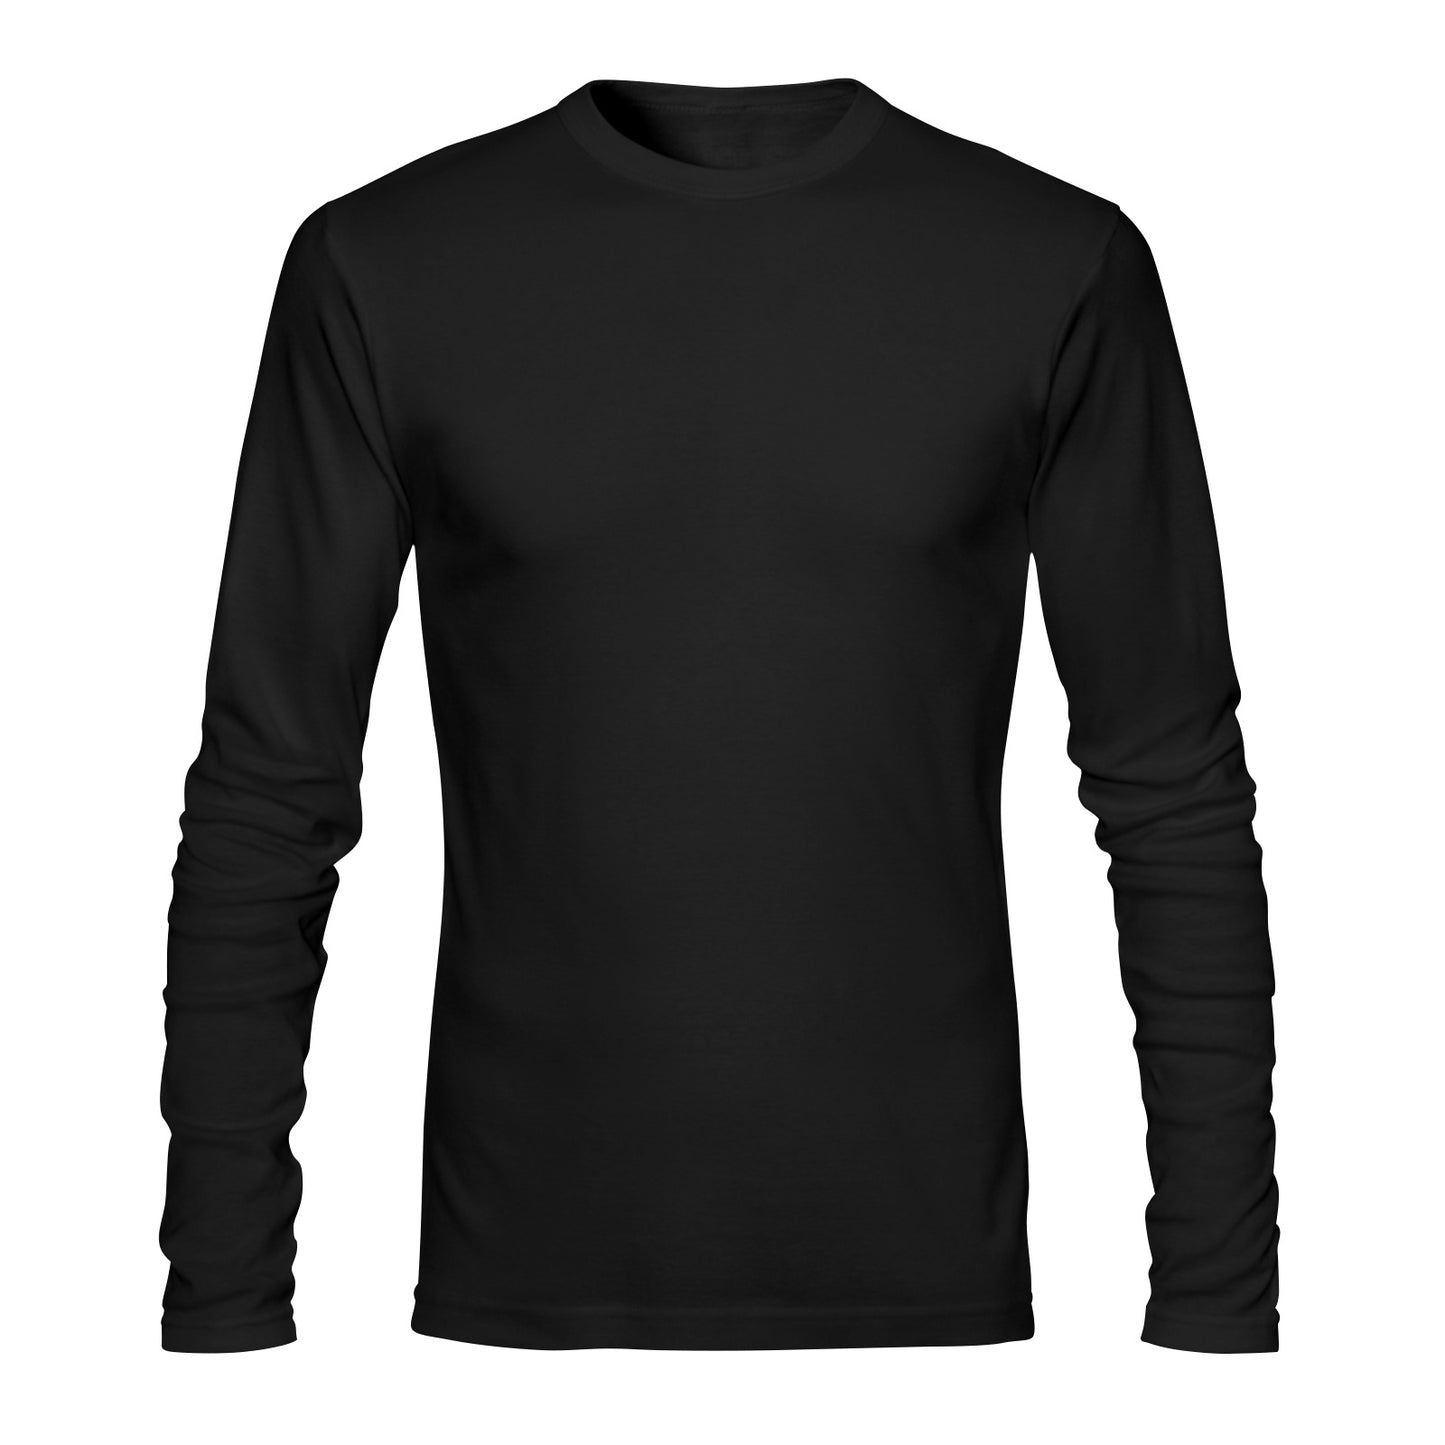 Jet Black Collection Men's Long sleeve T-shirt T08 - ELITA IMPERIA INC.